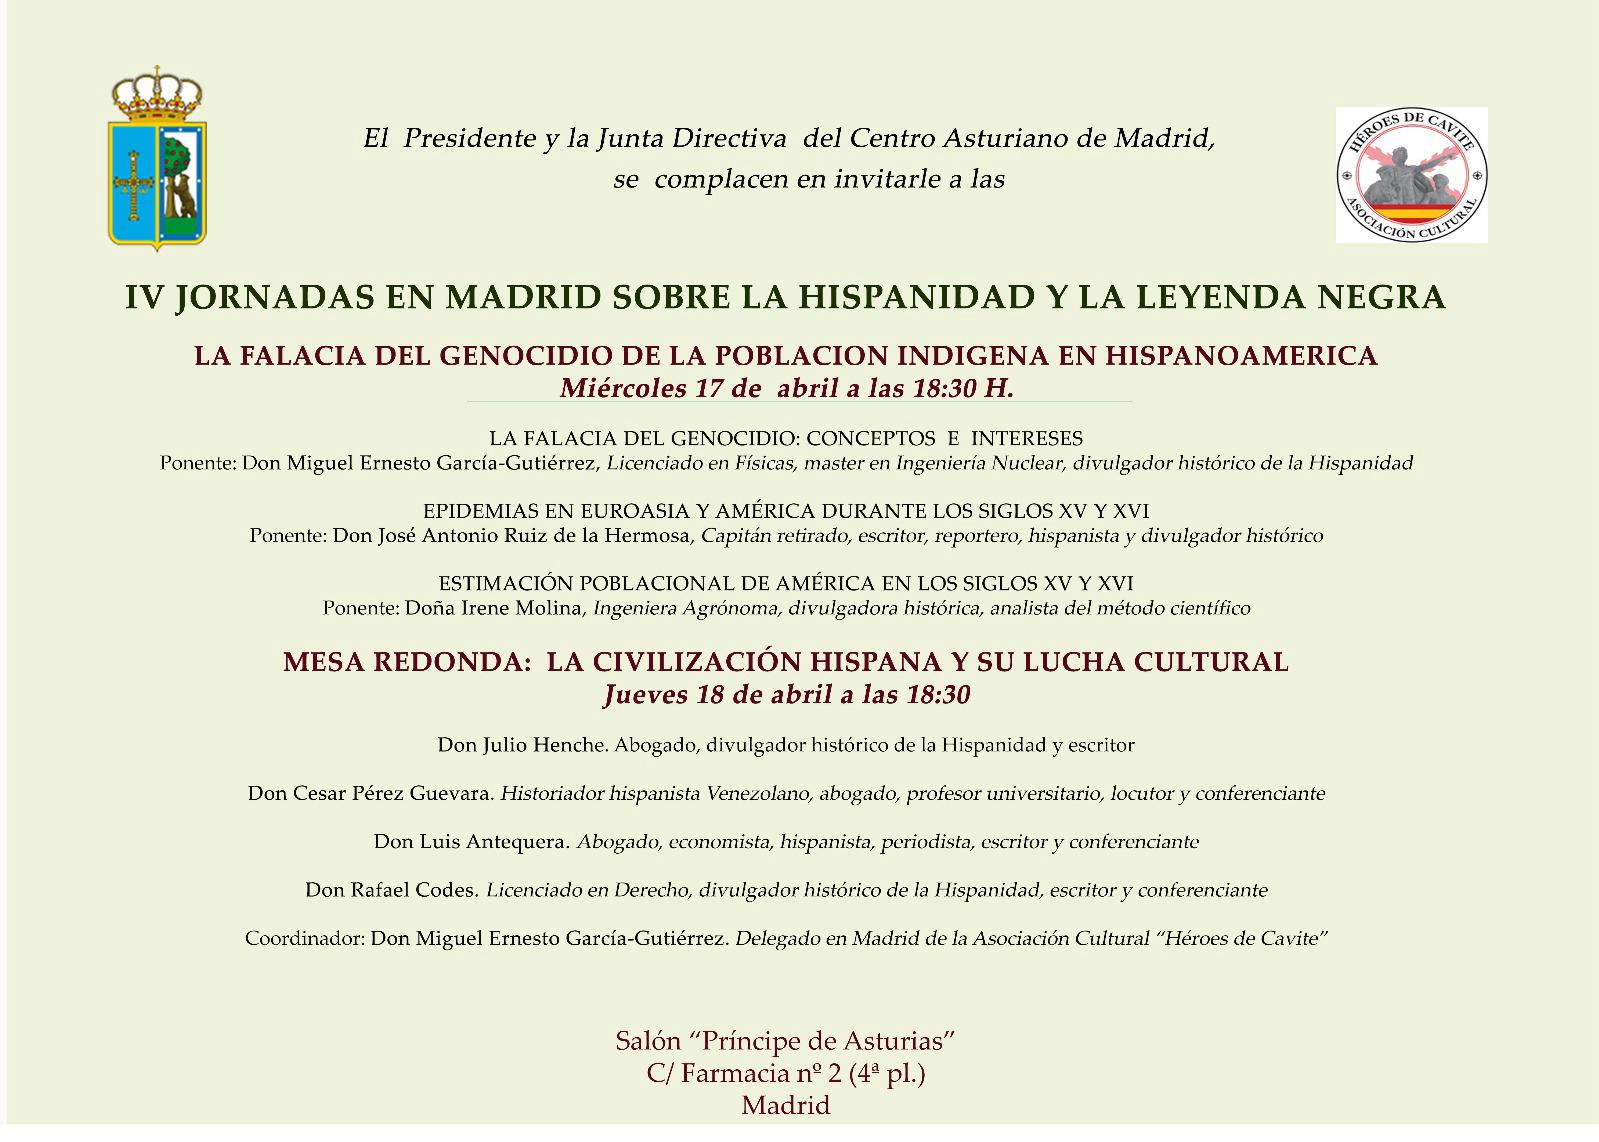 IV Jornadas en Madrid sobre Hispanidad y Leyenda Negra